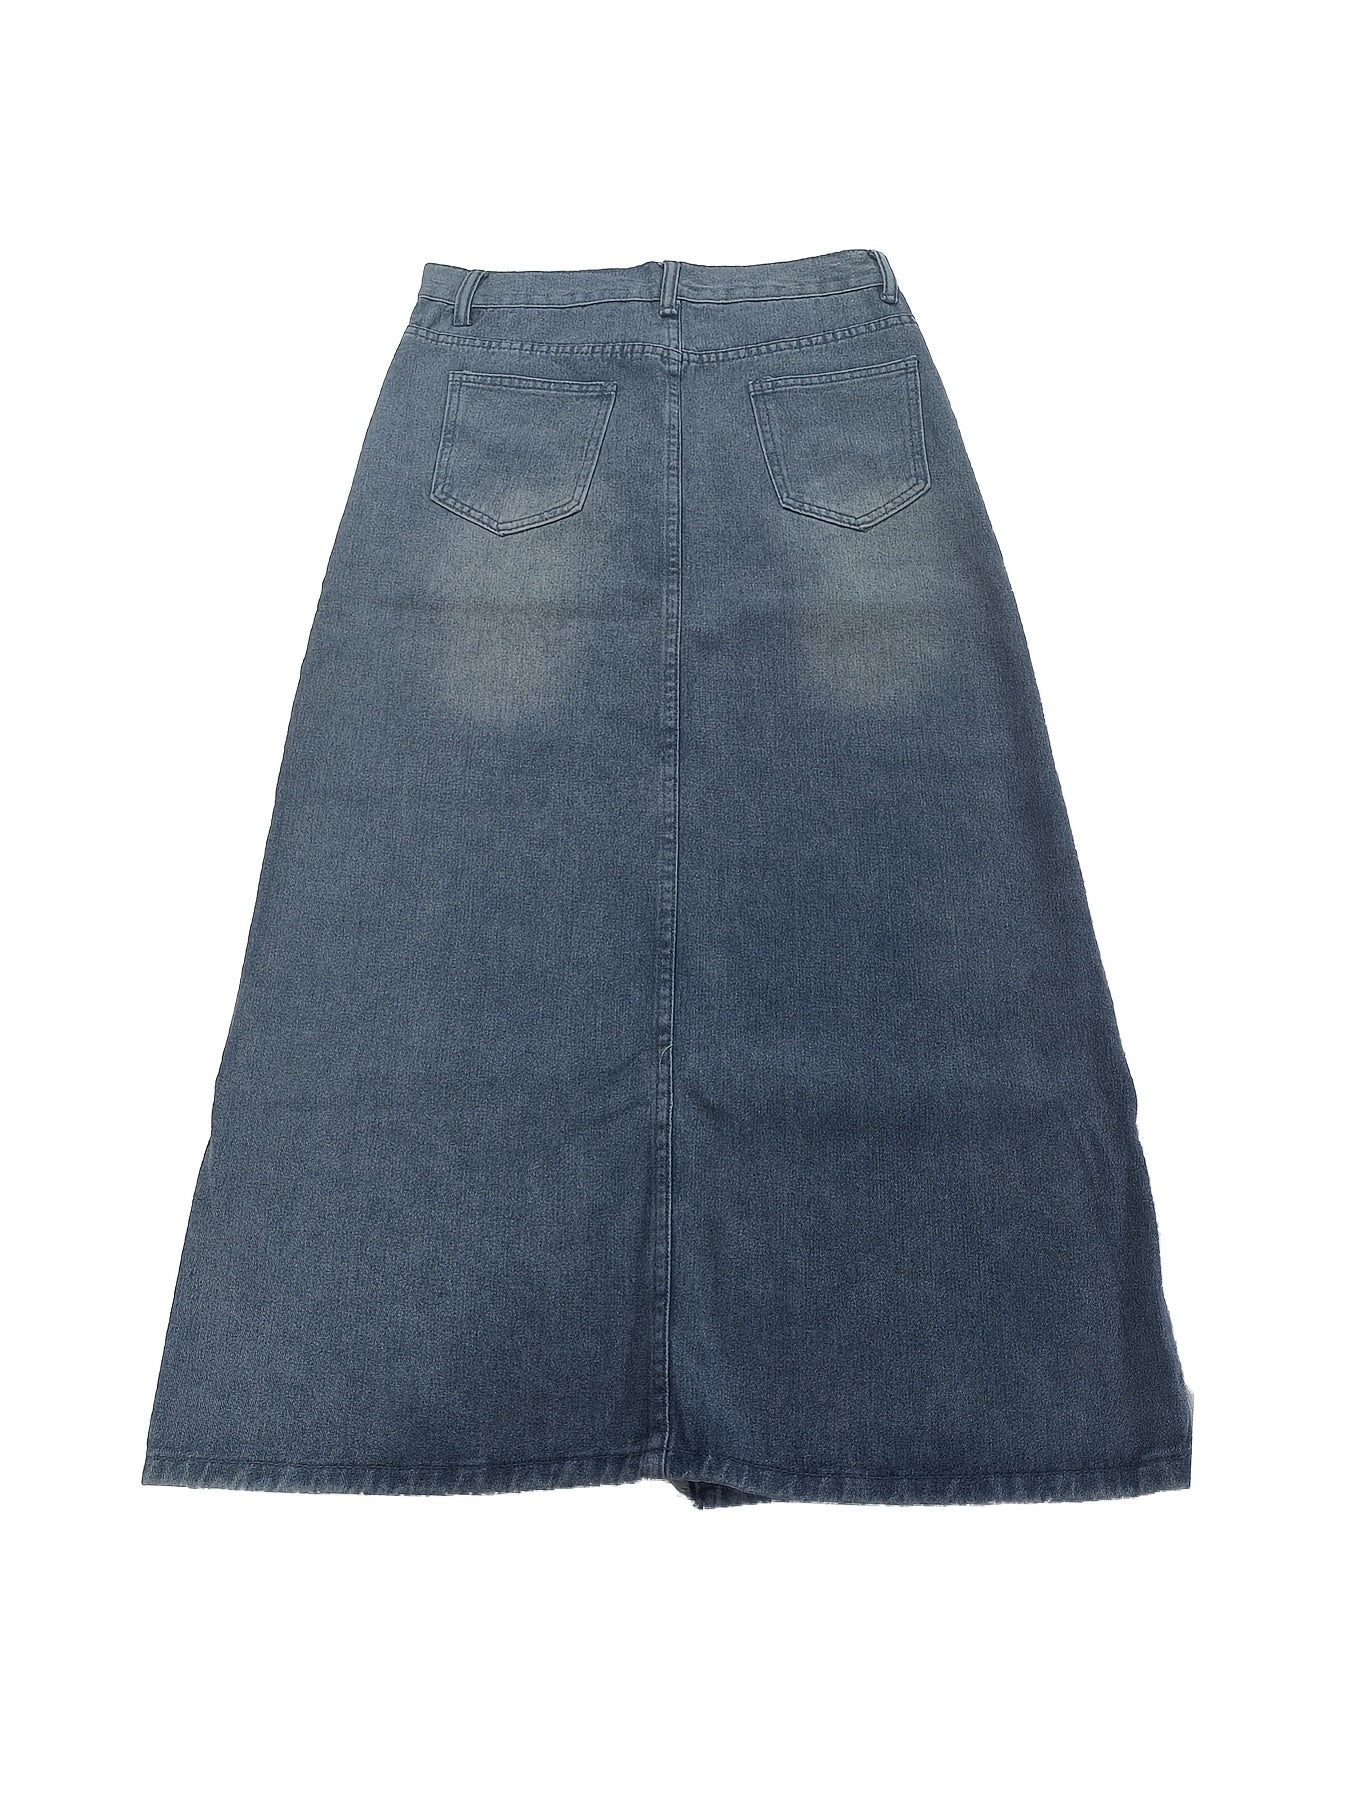 Vzyzv Split Front Niche Design Denim Midi Skirt, Double Button High Waist A-line Fashion Denim Skirt, Women's Denim Clothing